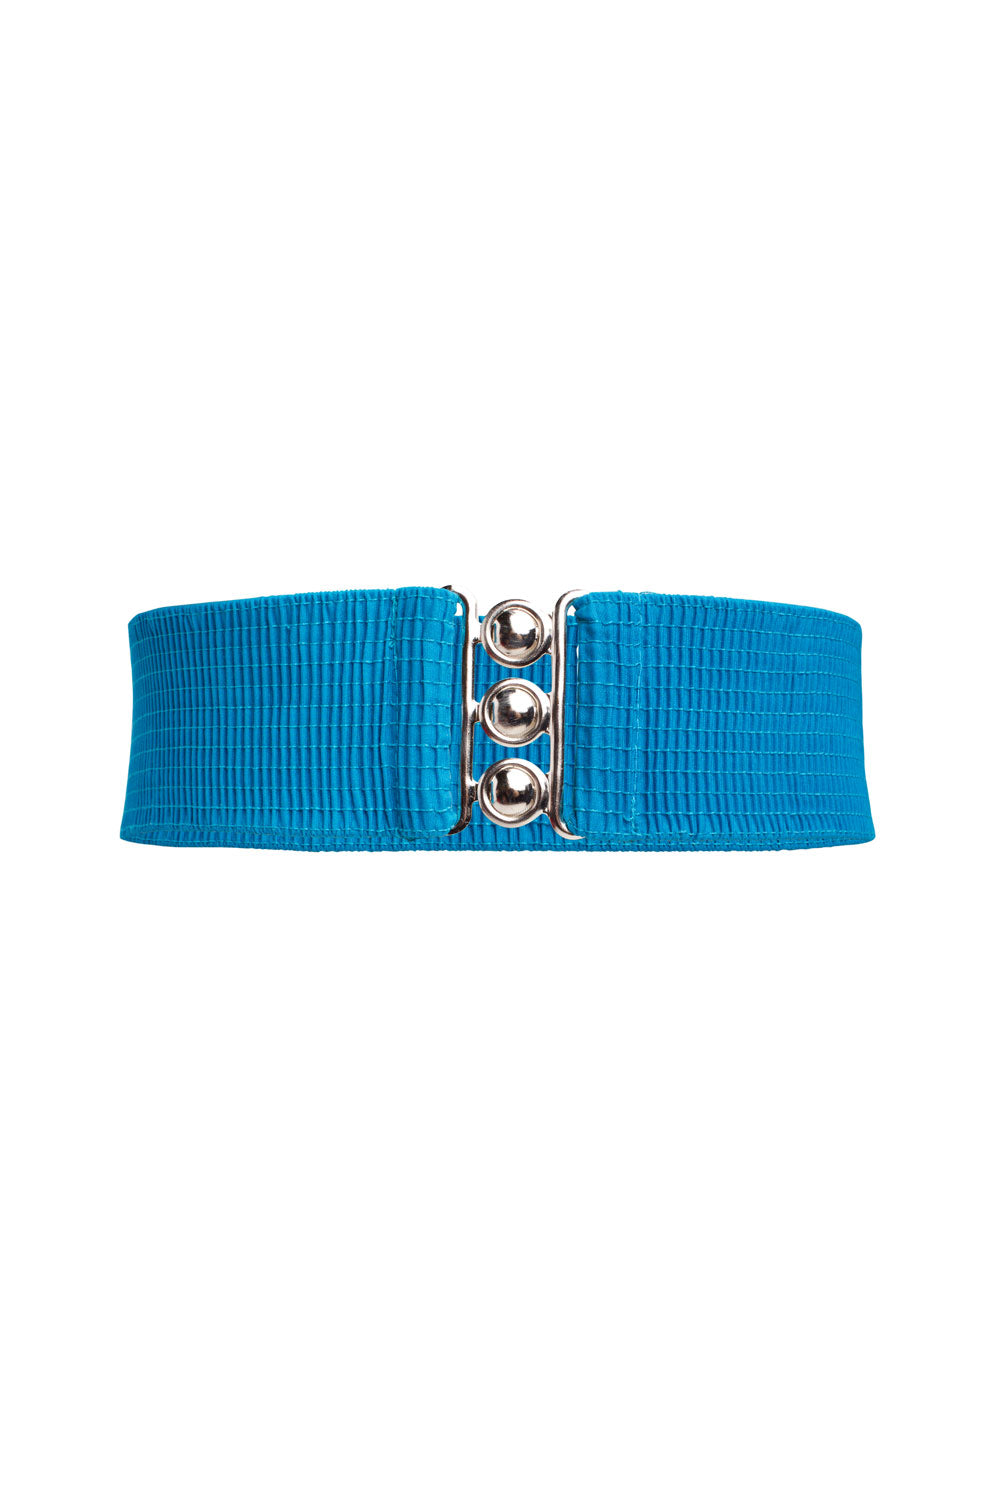 Lock It In Vintage Inspired Stretch Belt in Peacock Blue